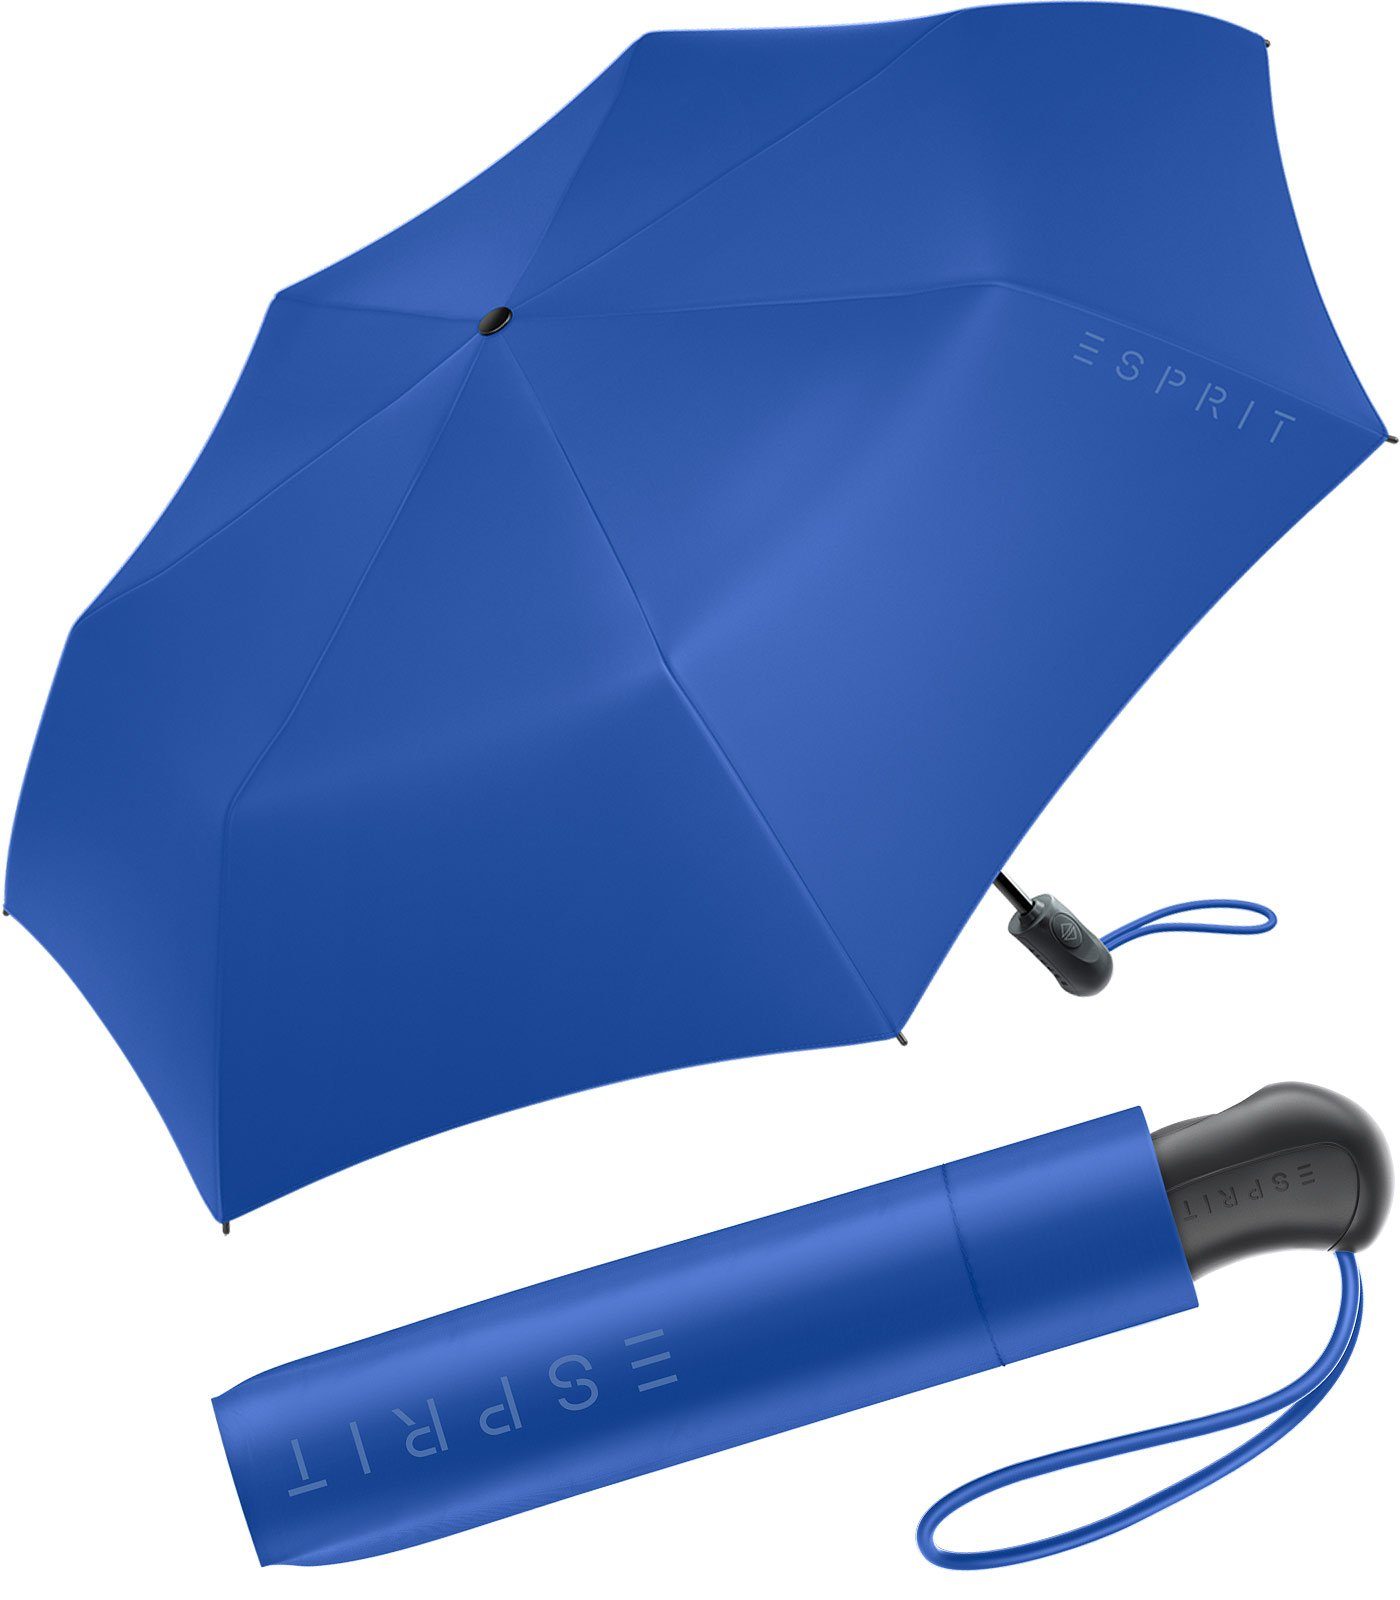 Esprit Langregenschirm Damen Easymatic Light Auf-Zu Automatik HW 2023, in den neuen Trendfarben, beaucoup blue blau